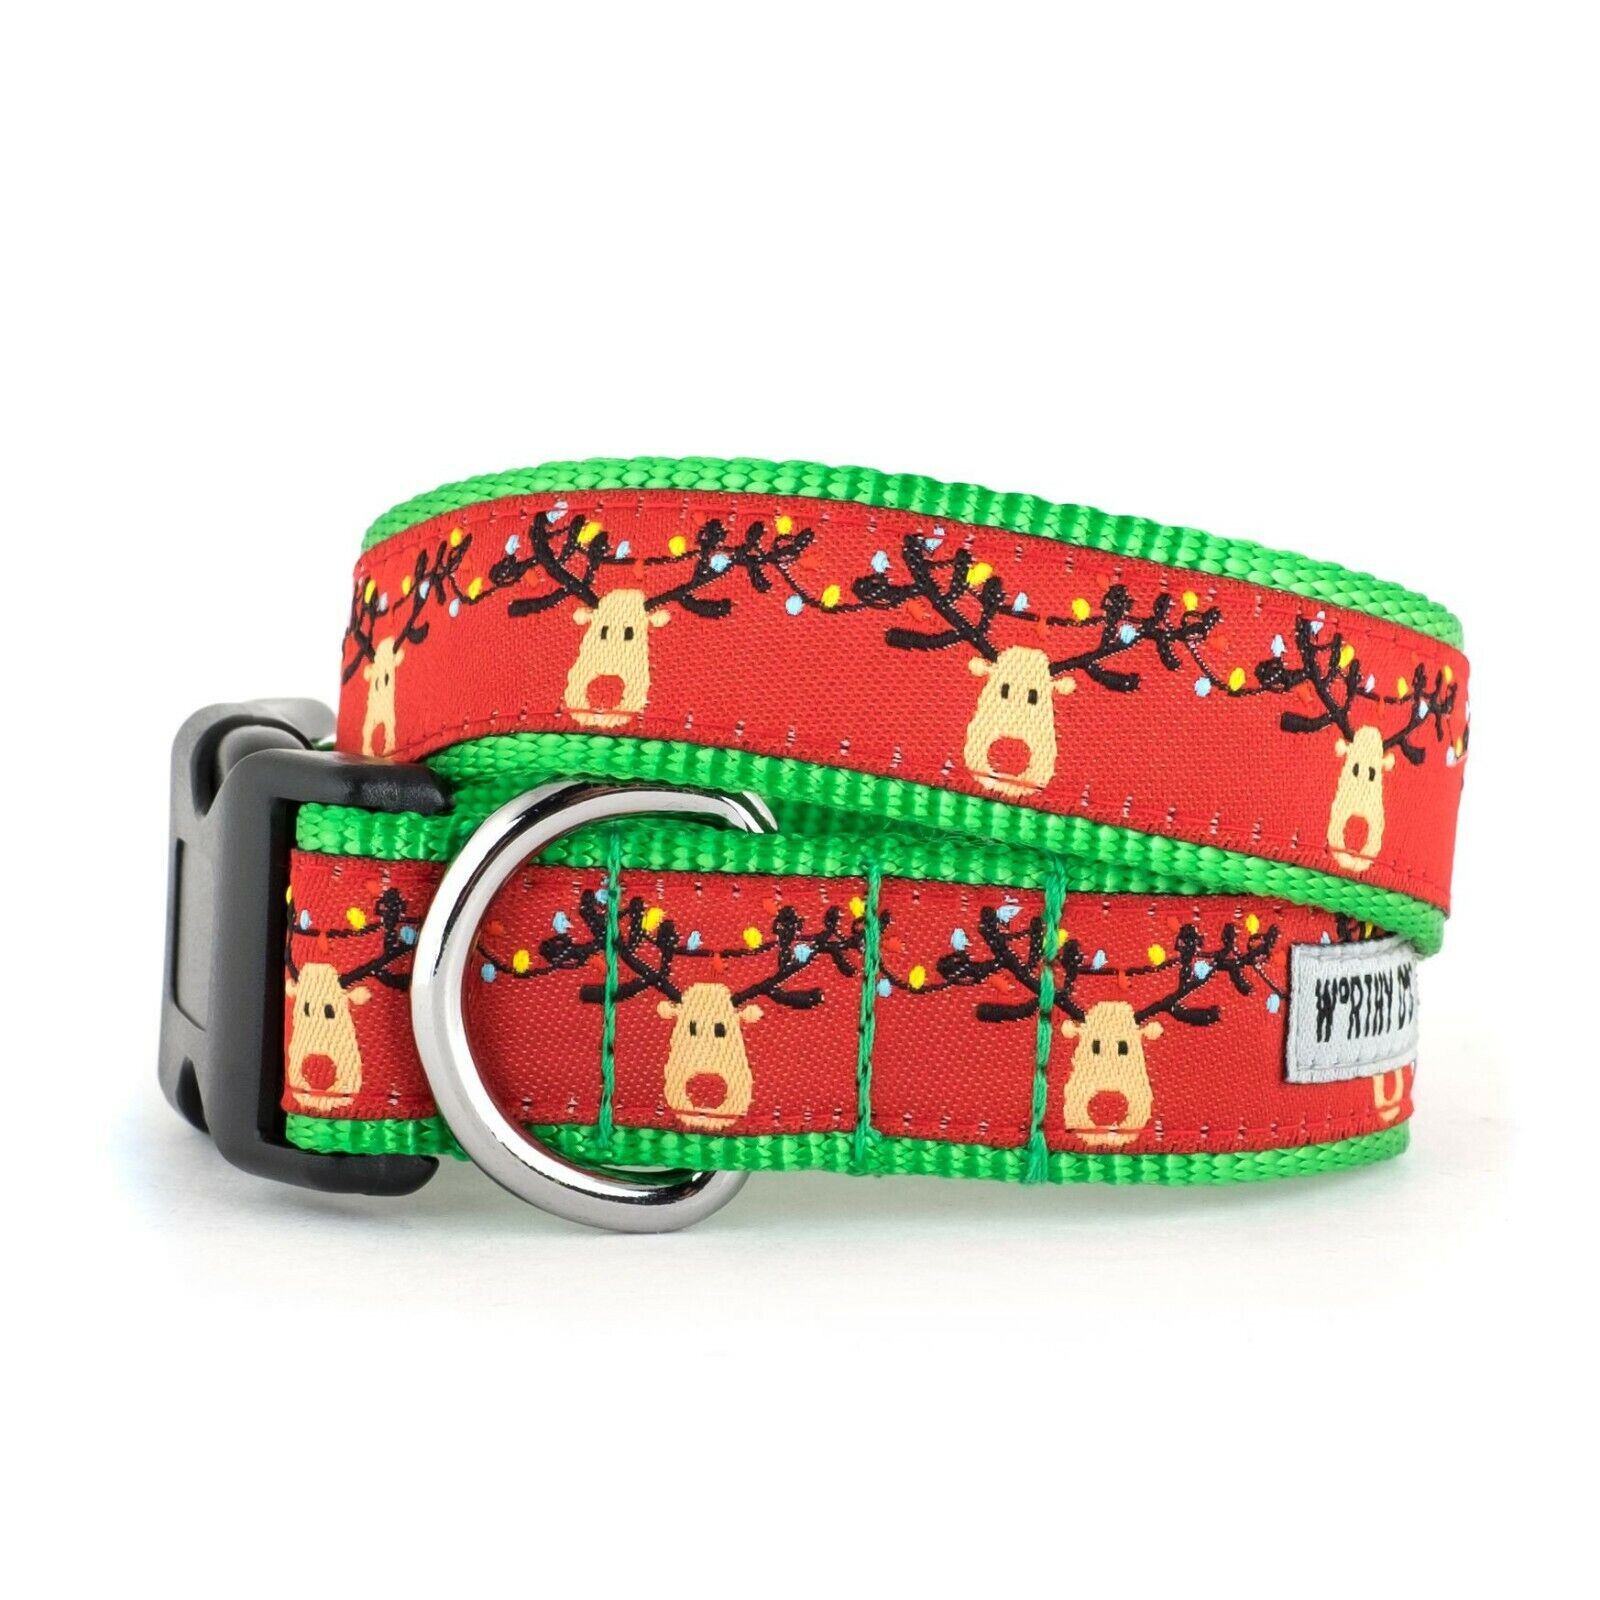 THE WORTHY DOG Rudy Dog Pet Nylon Collar, Red Sizes XS-XL